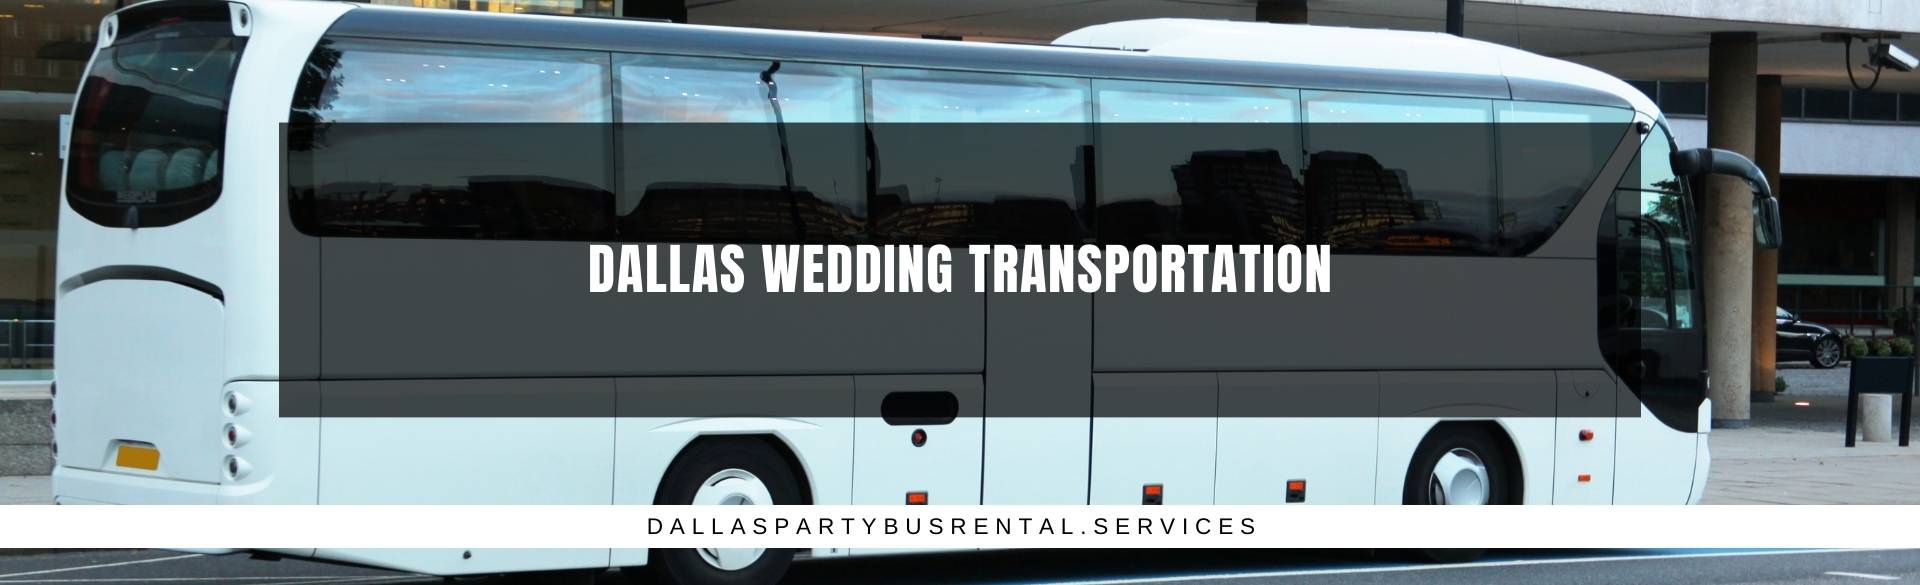 Dallas Wedding Transportation